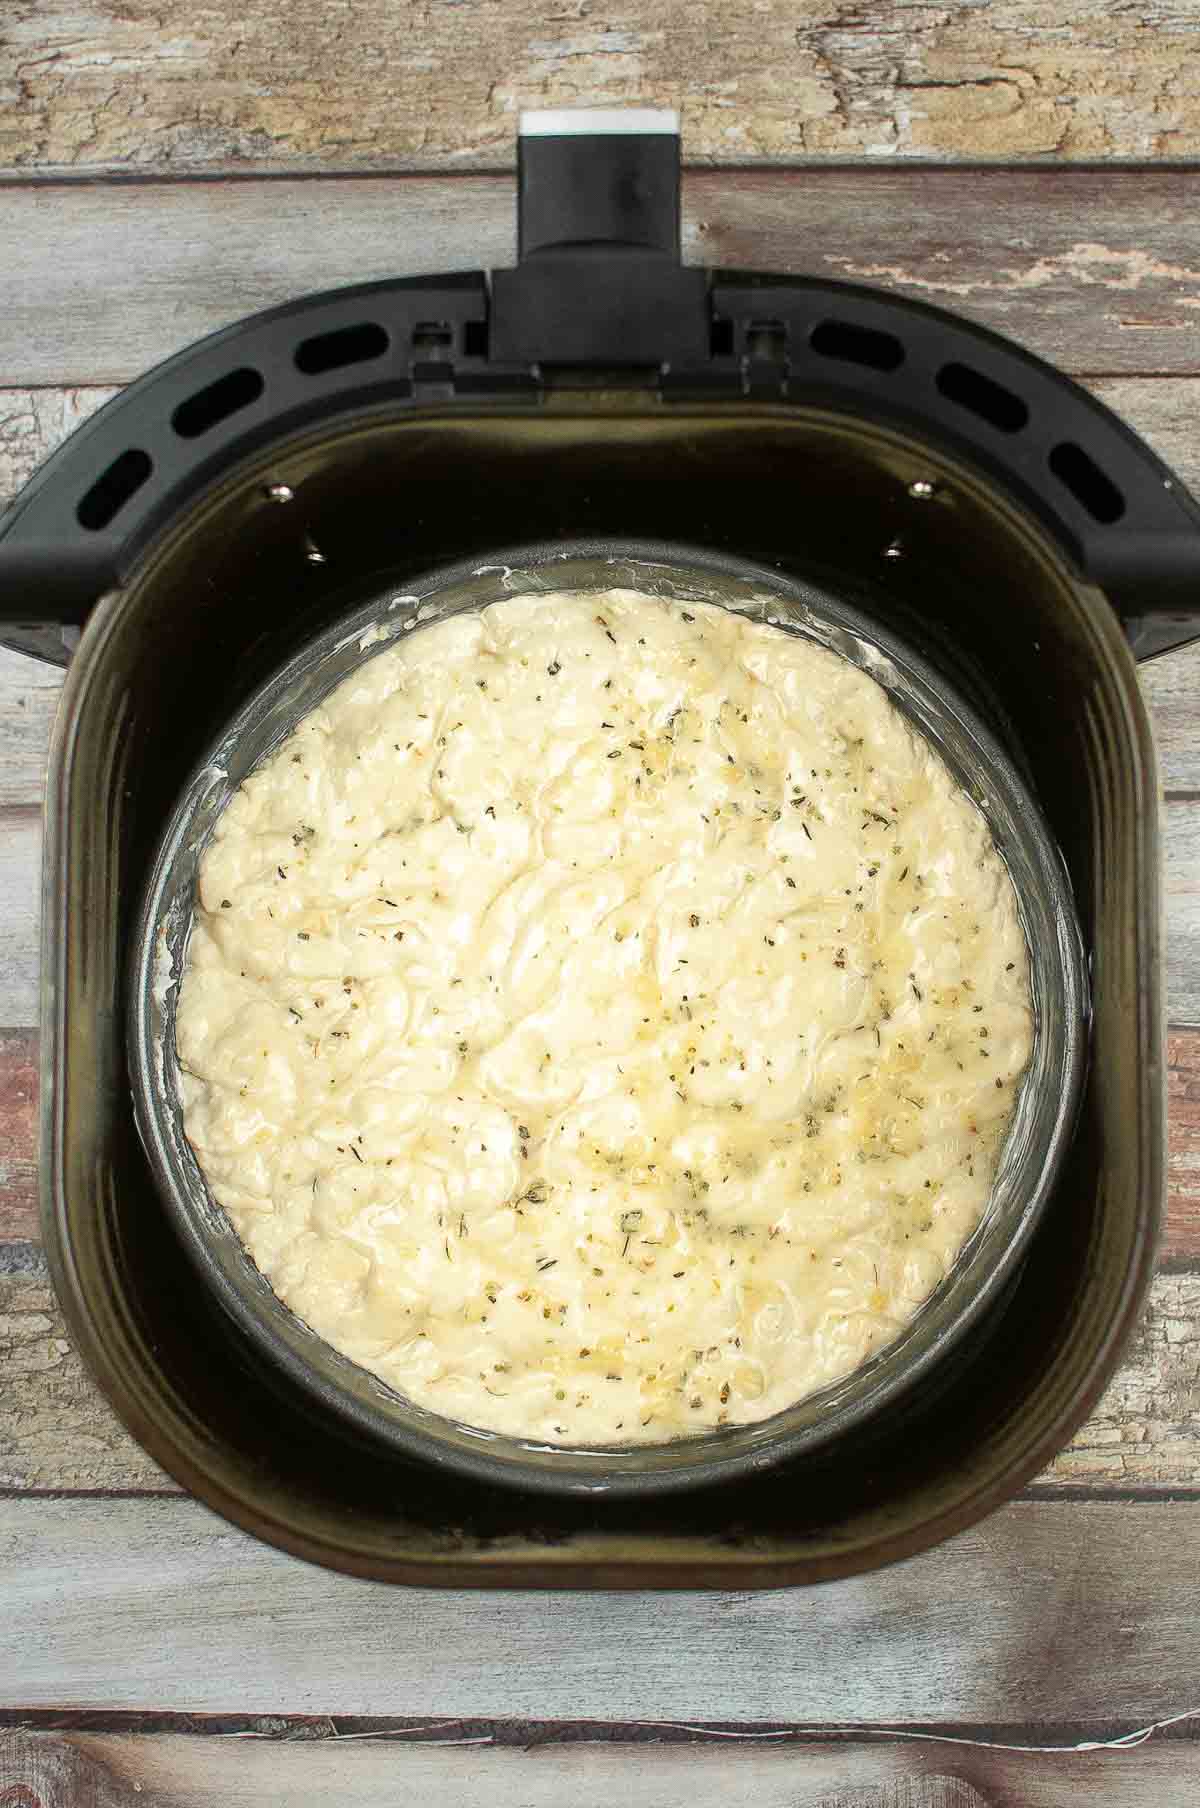 Pan of focaccia dough in the air fryer